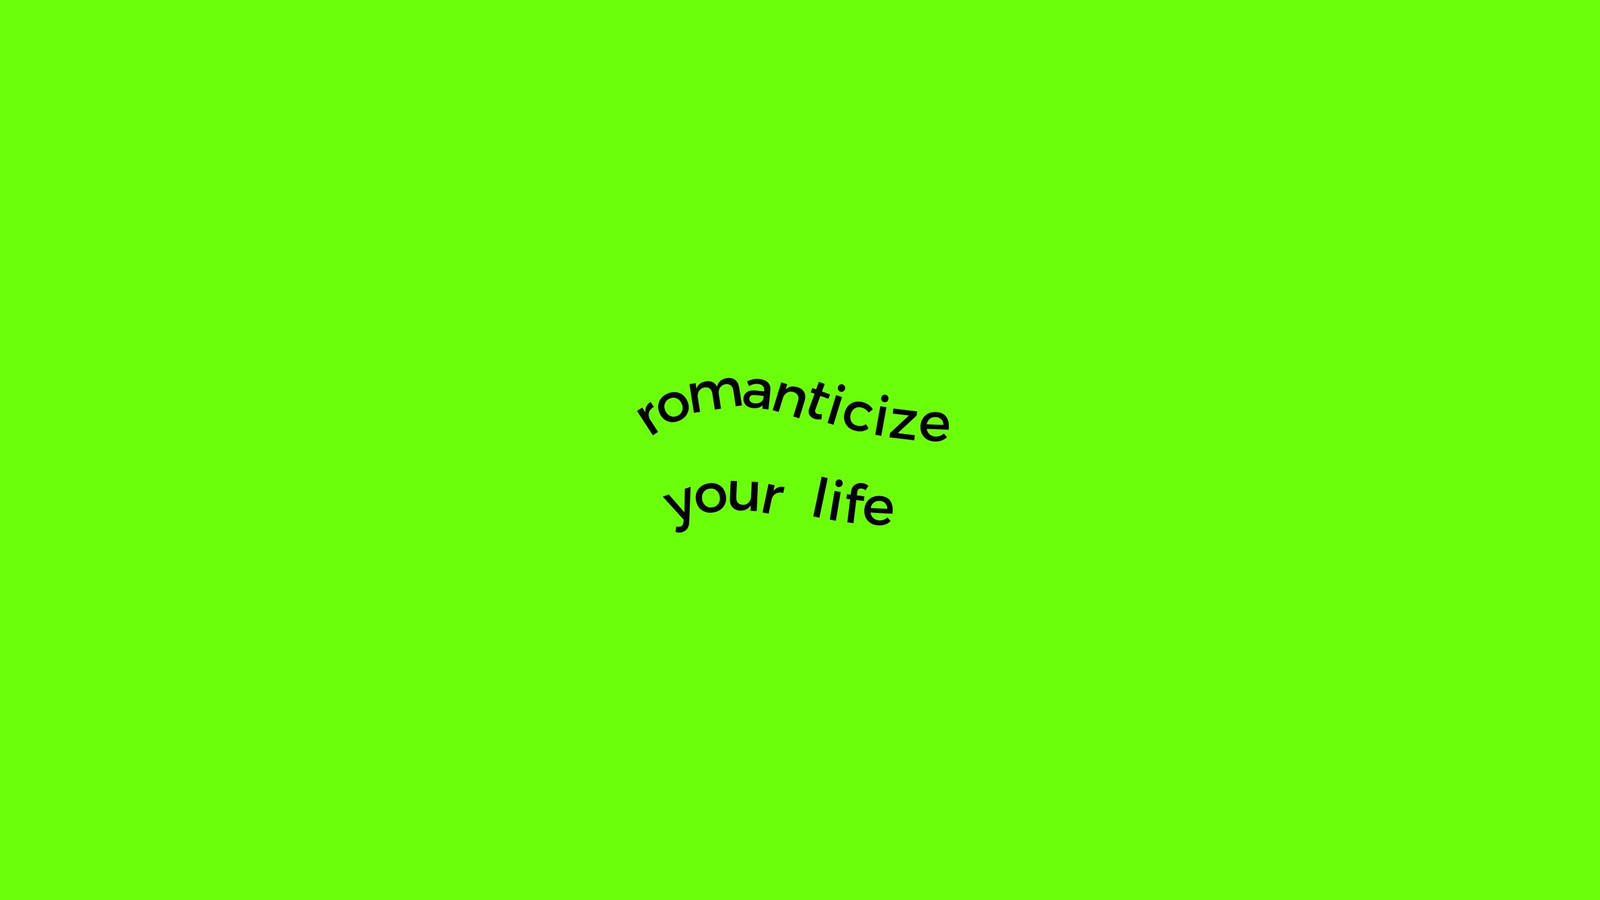 Romanticize Your Life Greenscreen Background Wallpaper